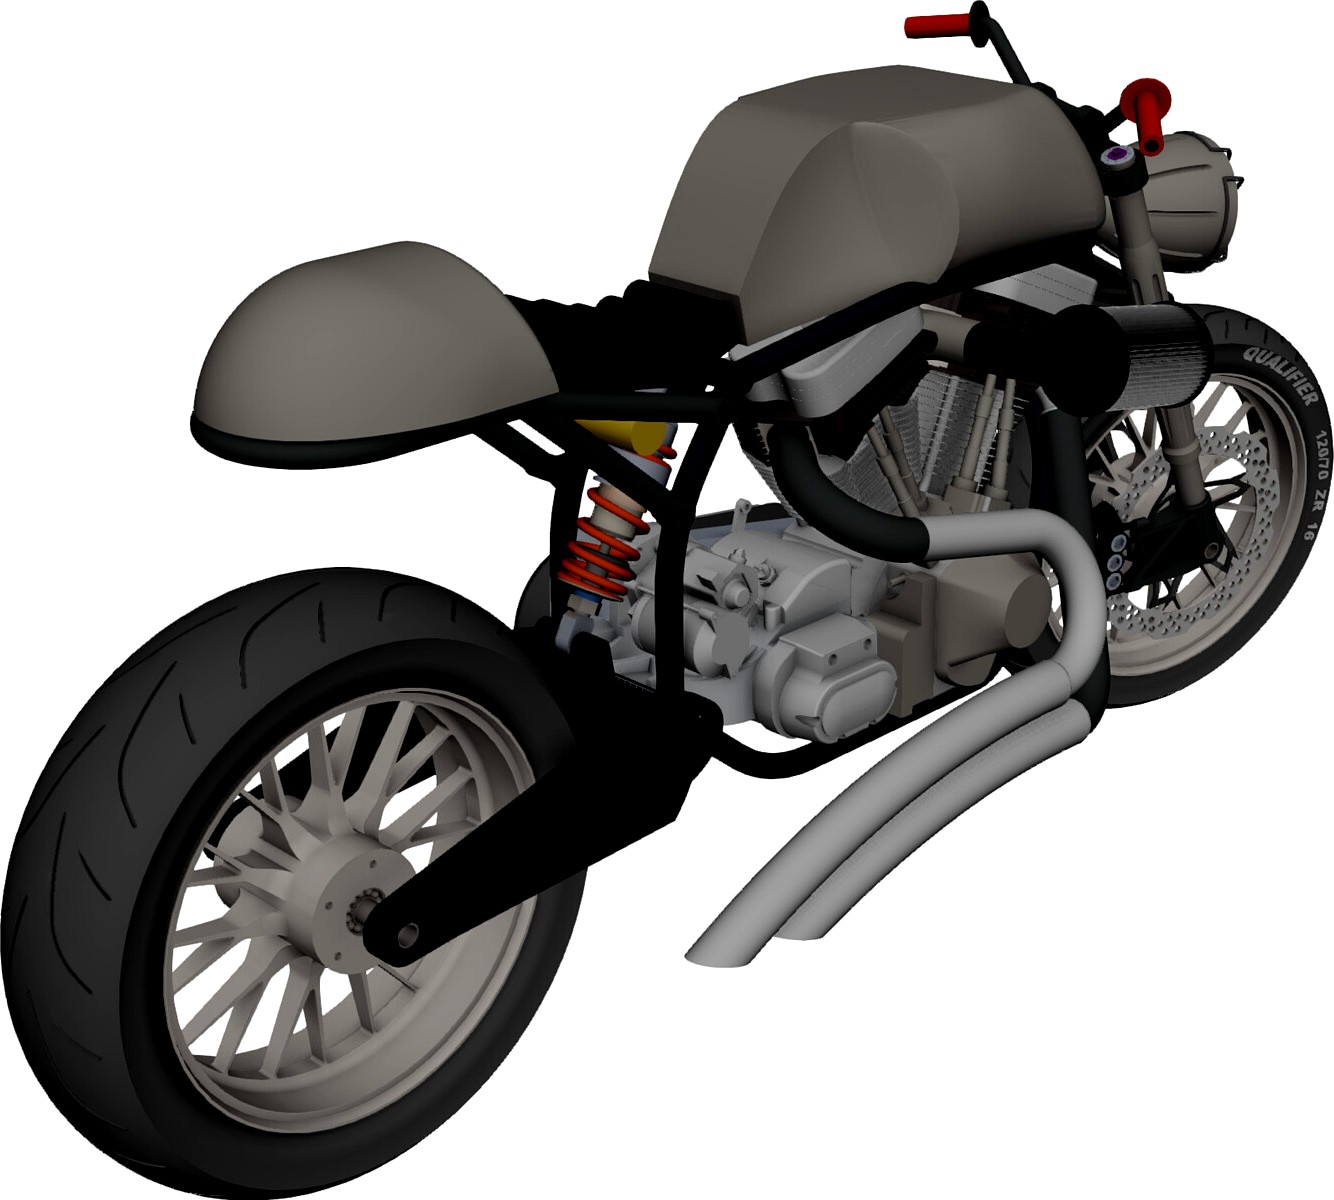 Motorcycle 3D CAD Model